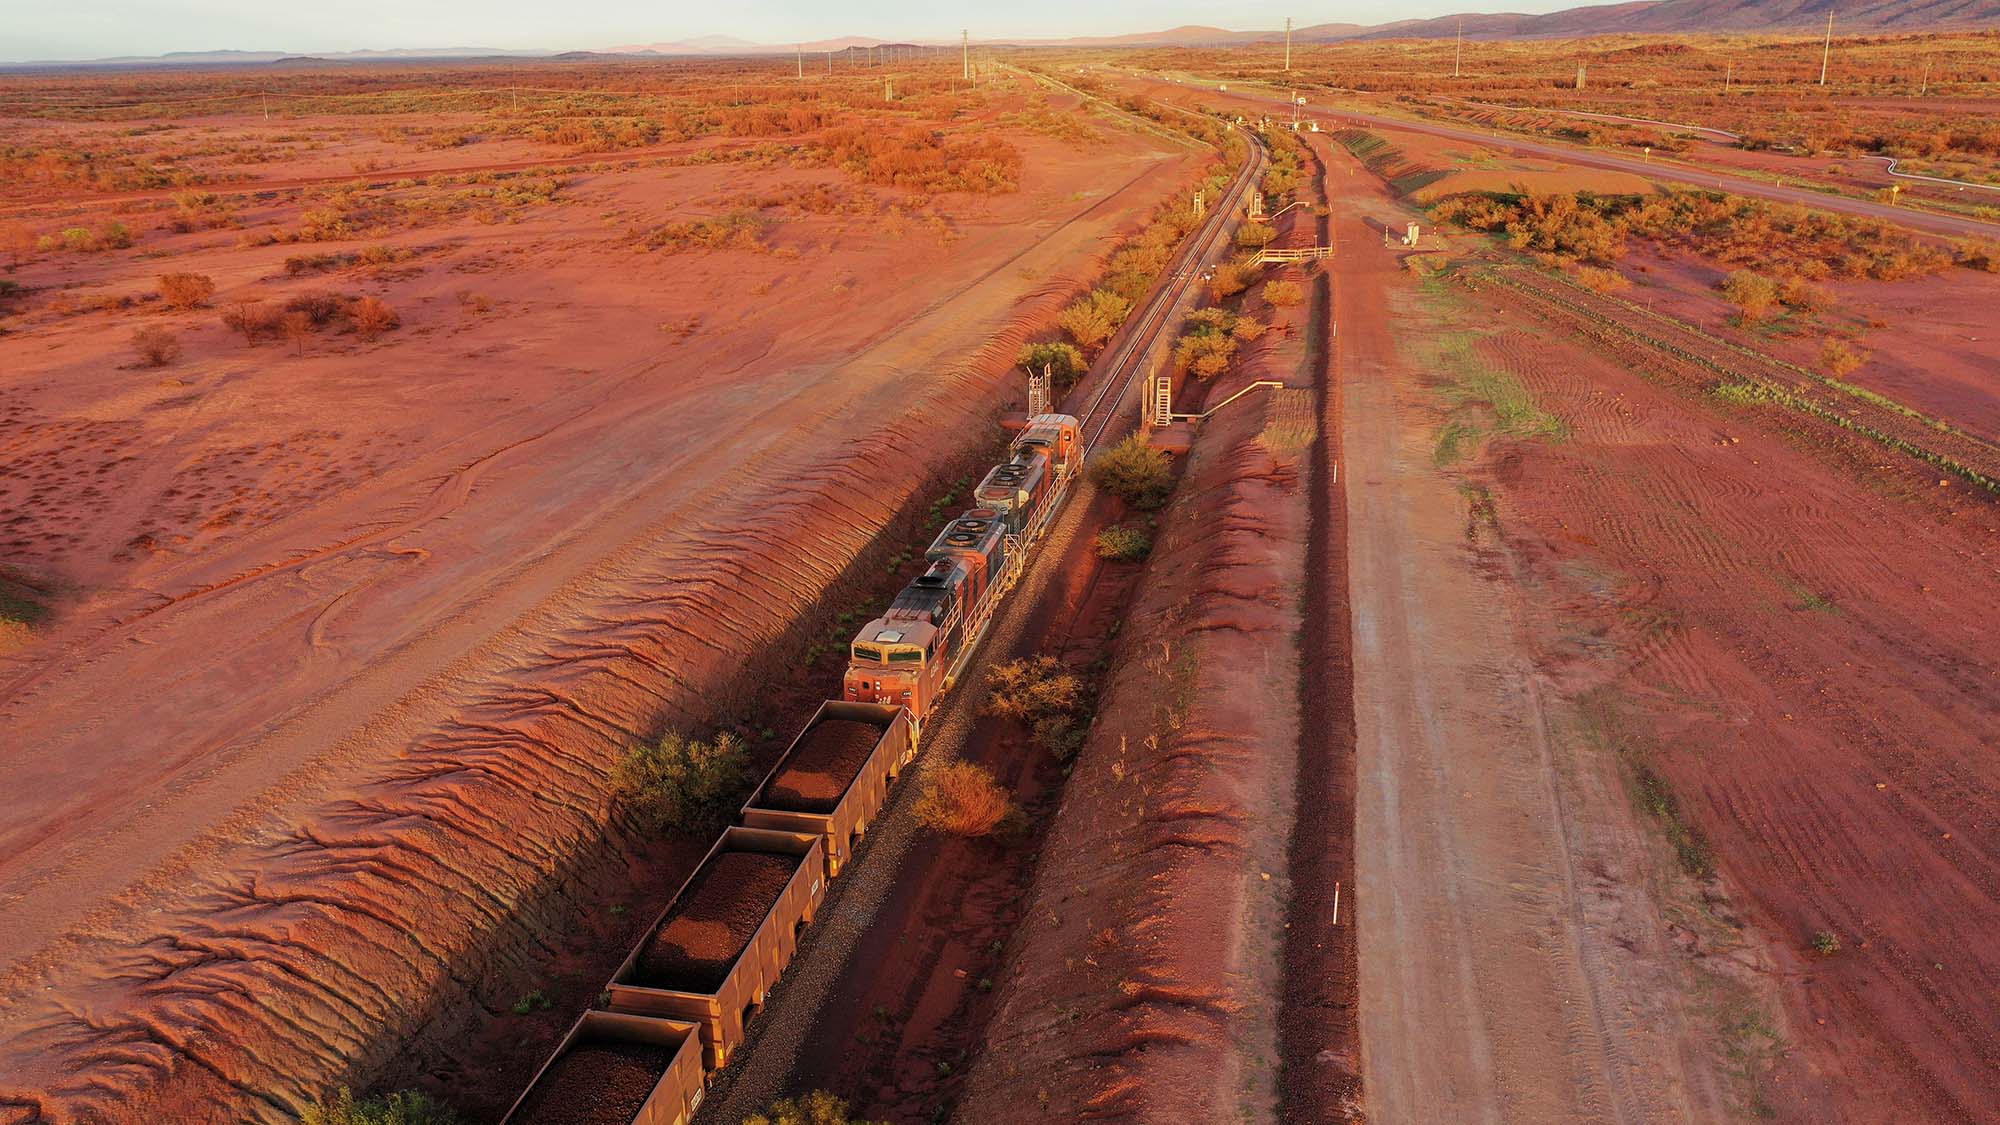 Bird's eye view of a BHP train in the Australia desert